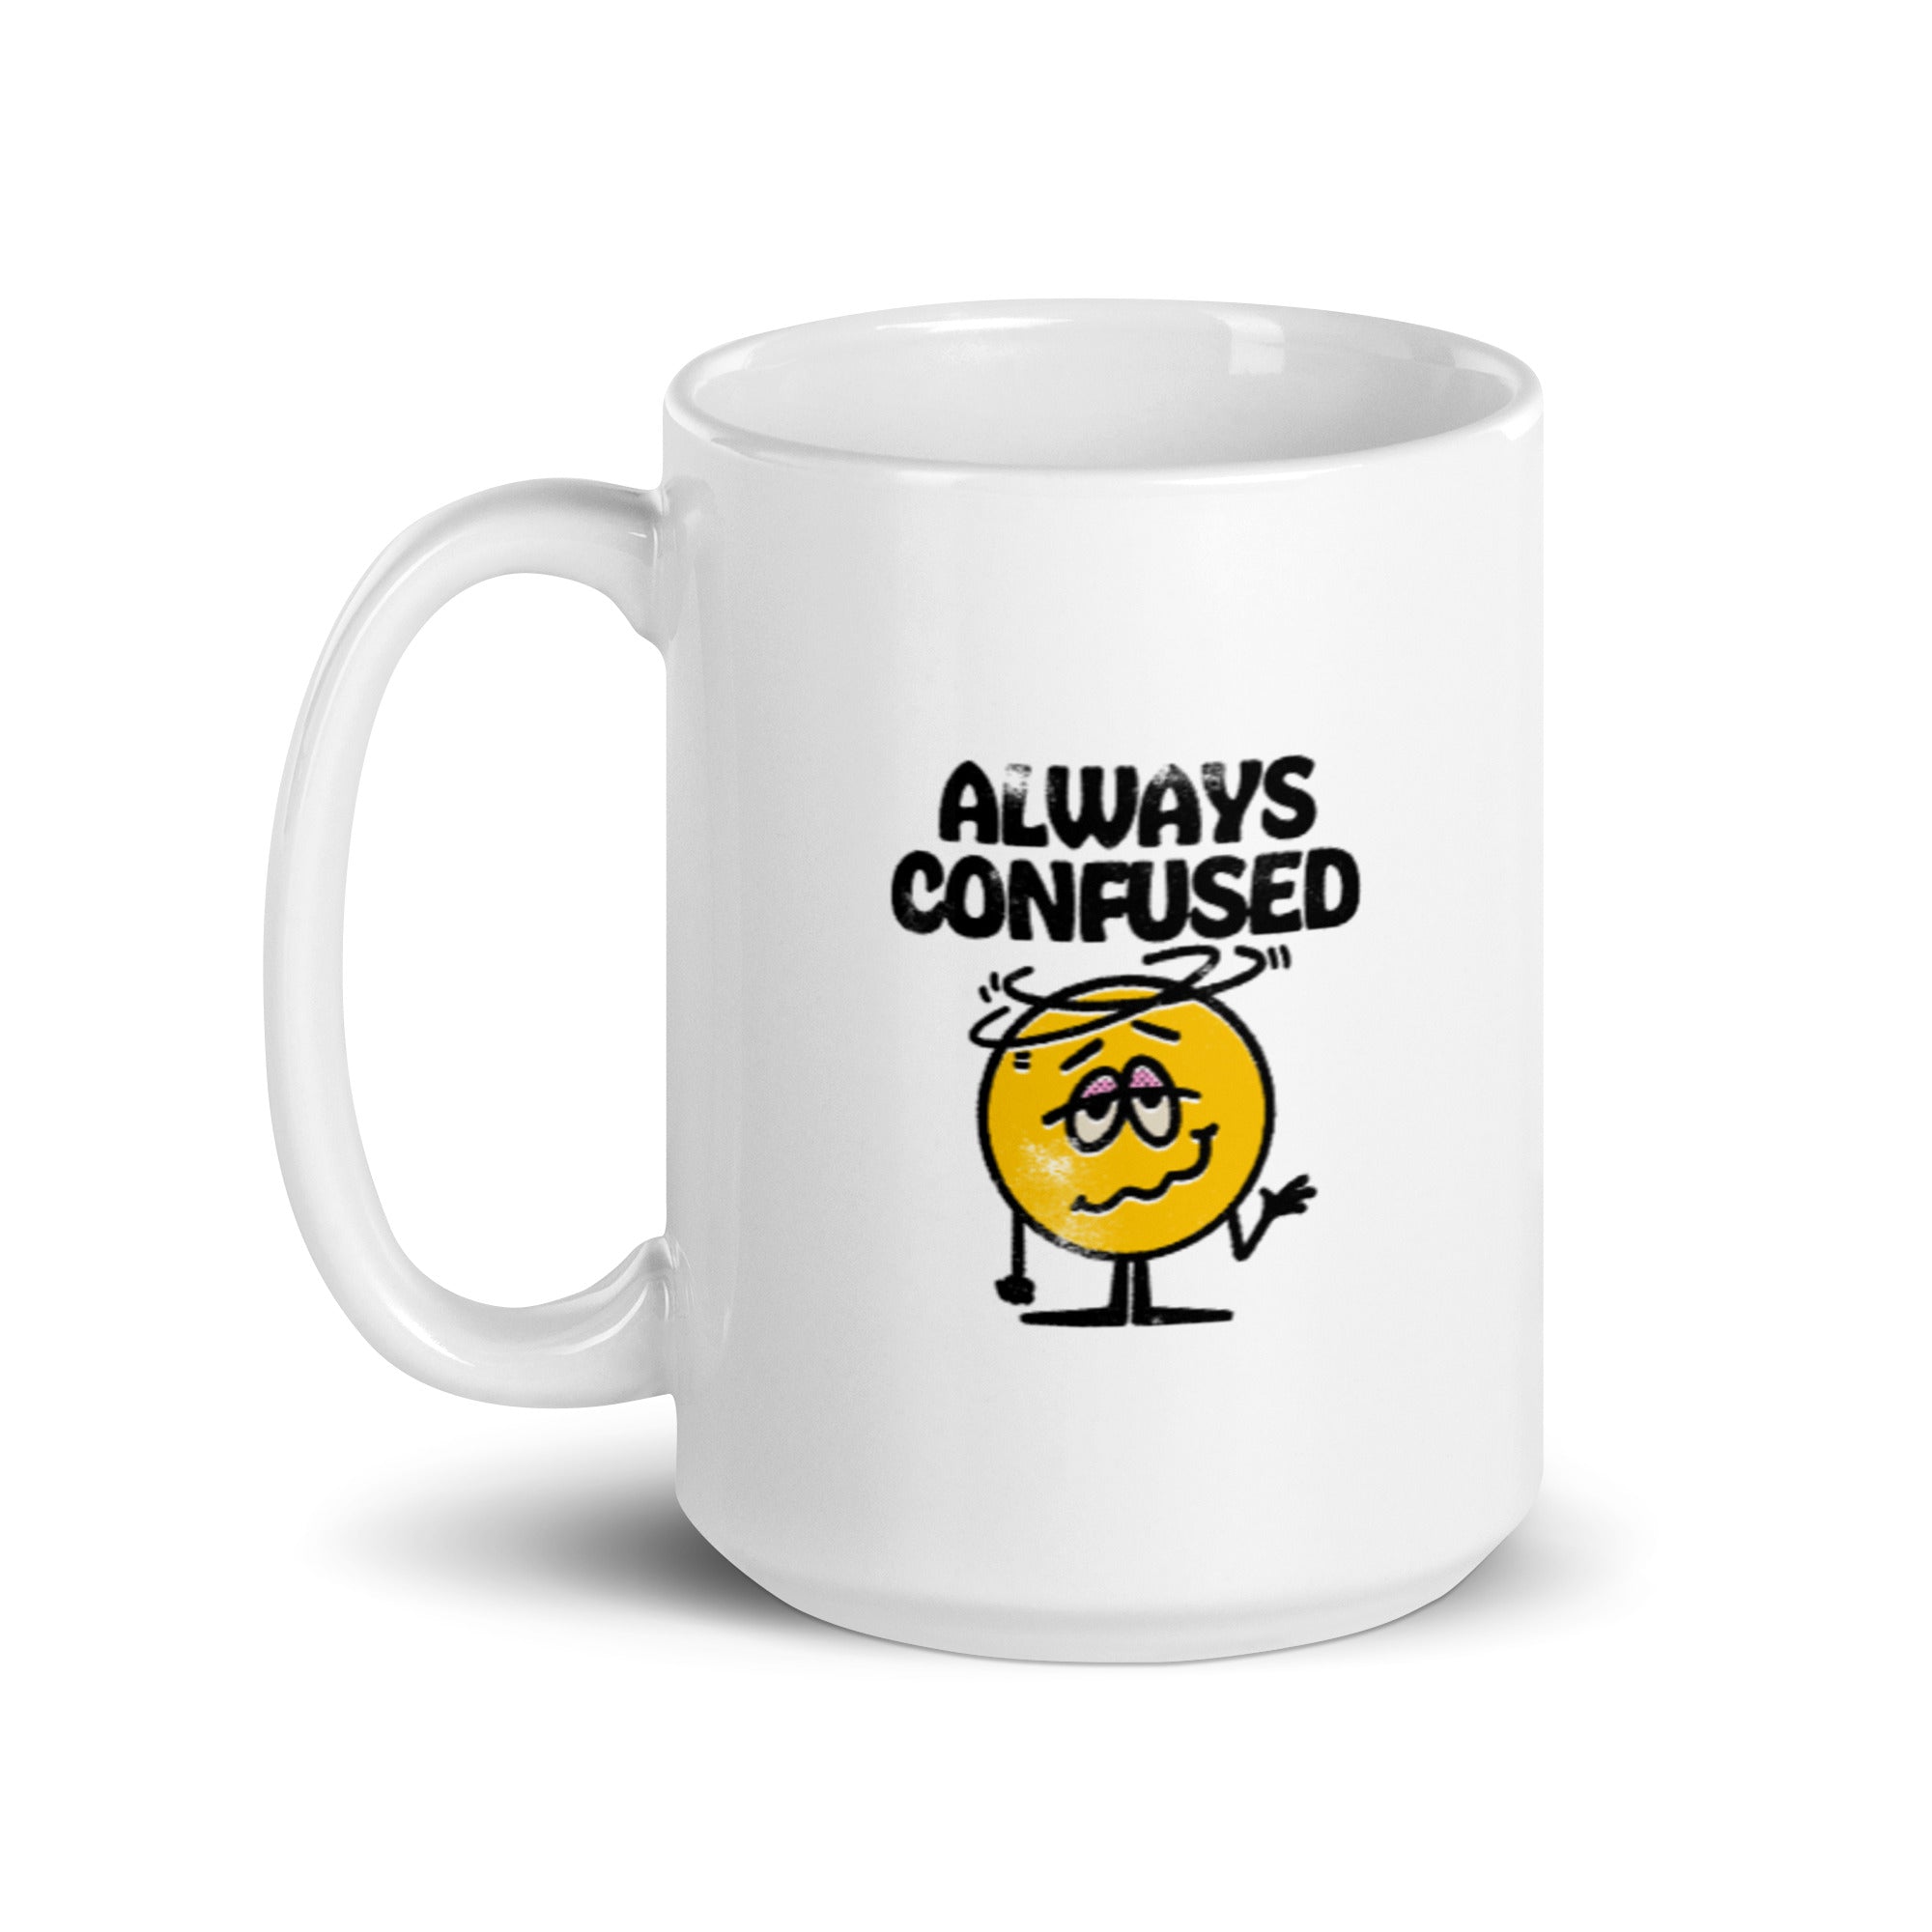 Always Confused - White glossy mug